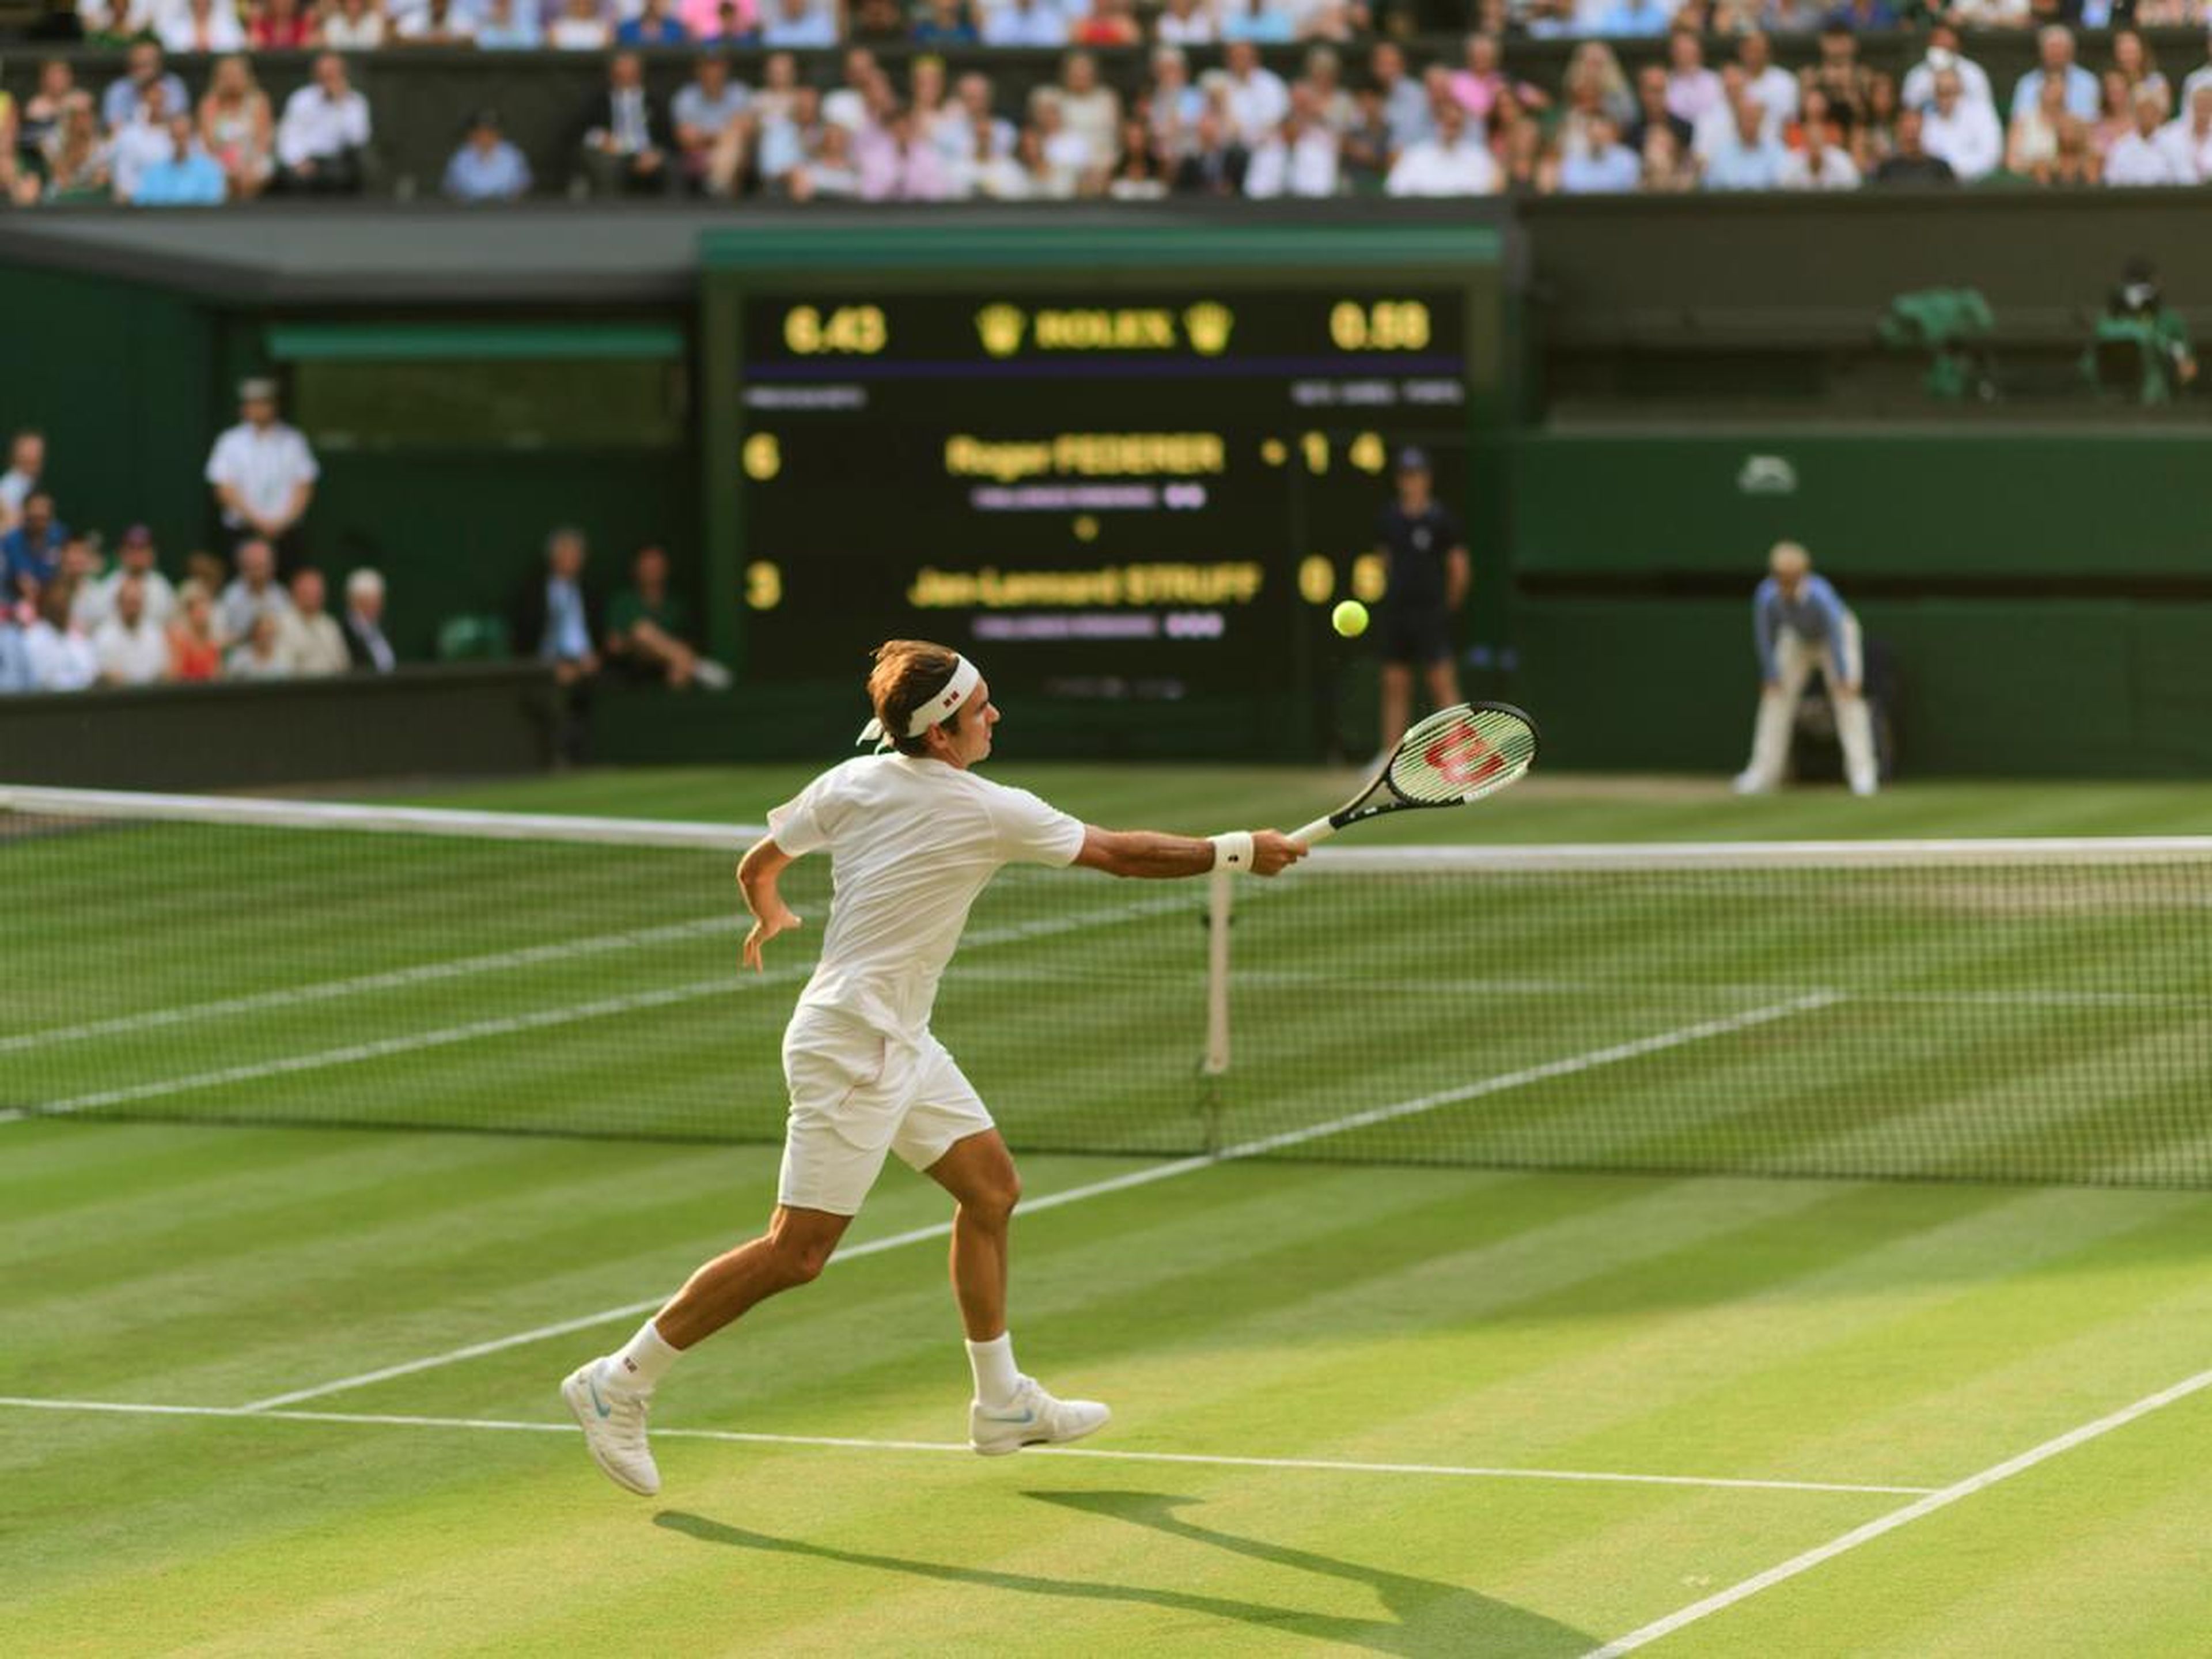 Federer hits a return at Wimbledon 2018.